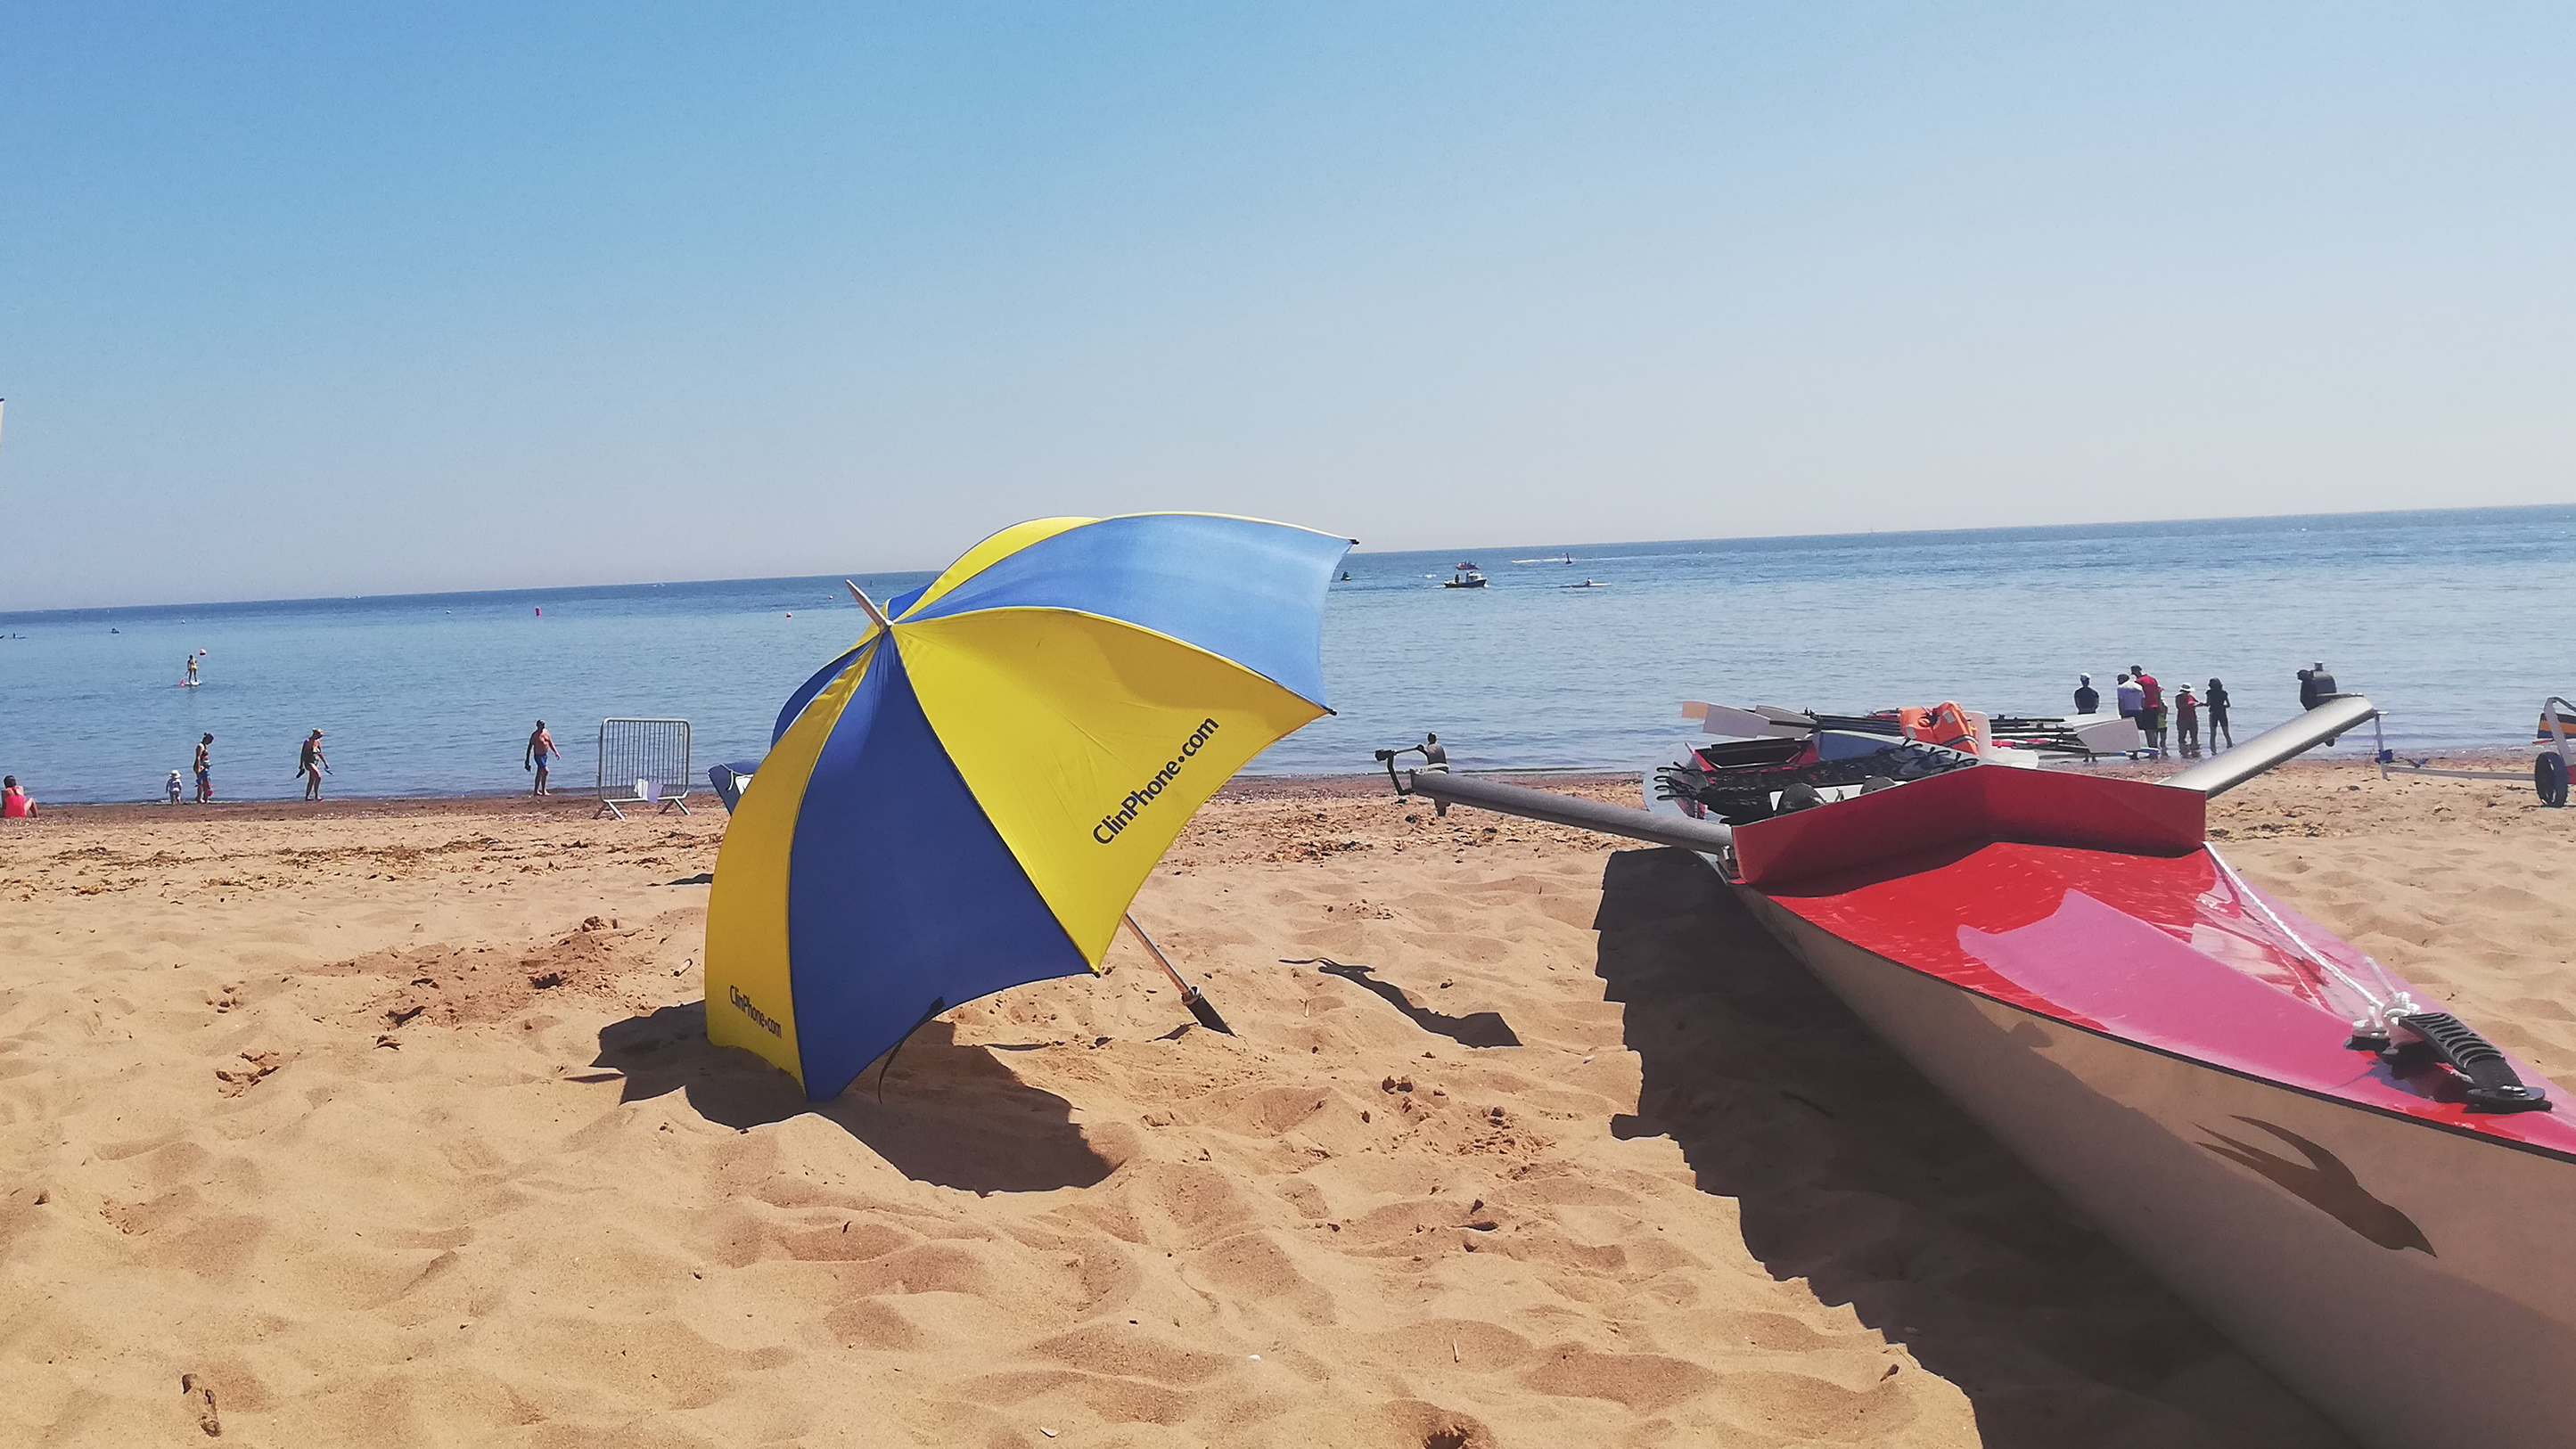 a coastal rowing boat on a beach with a beach umbrella